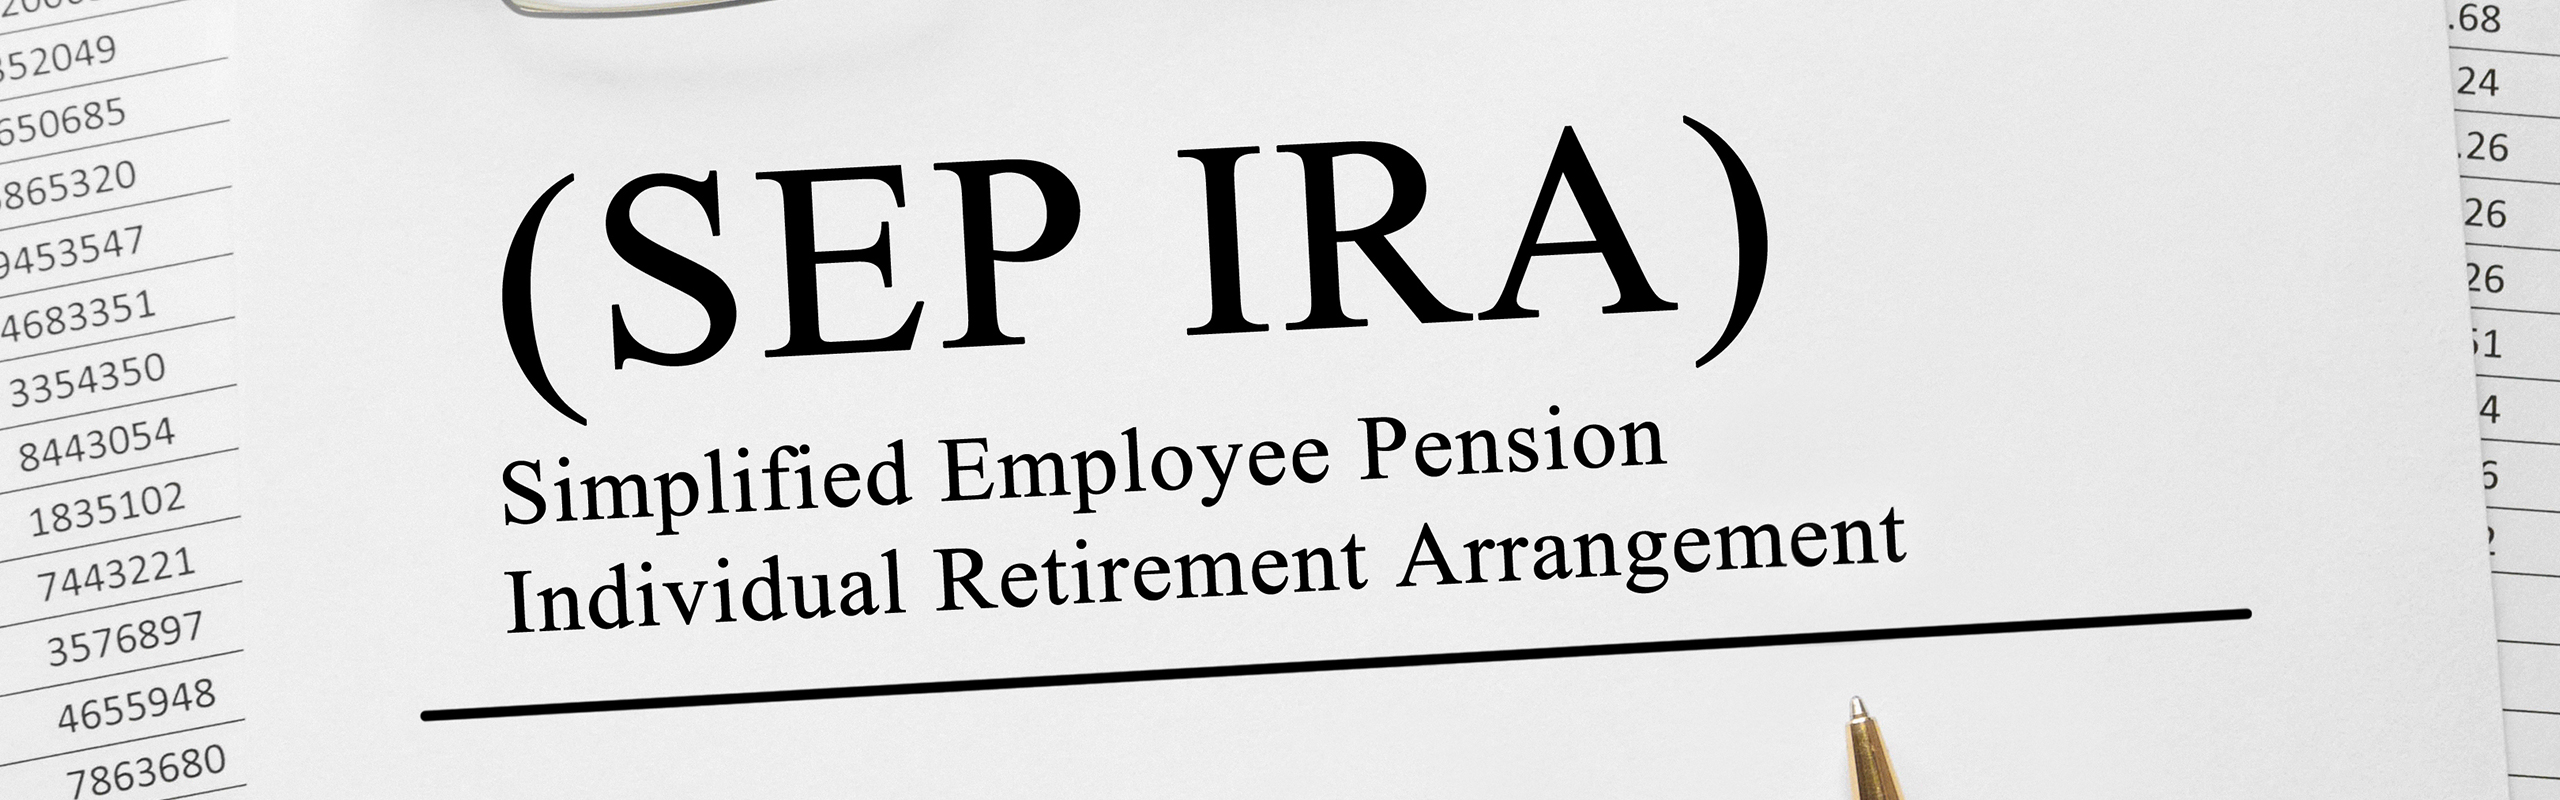 Simplified Employee Pension Individual Retirement Arrangement